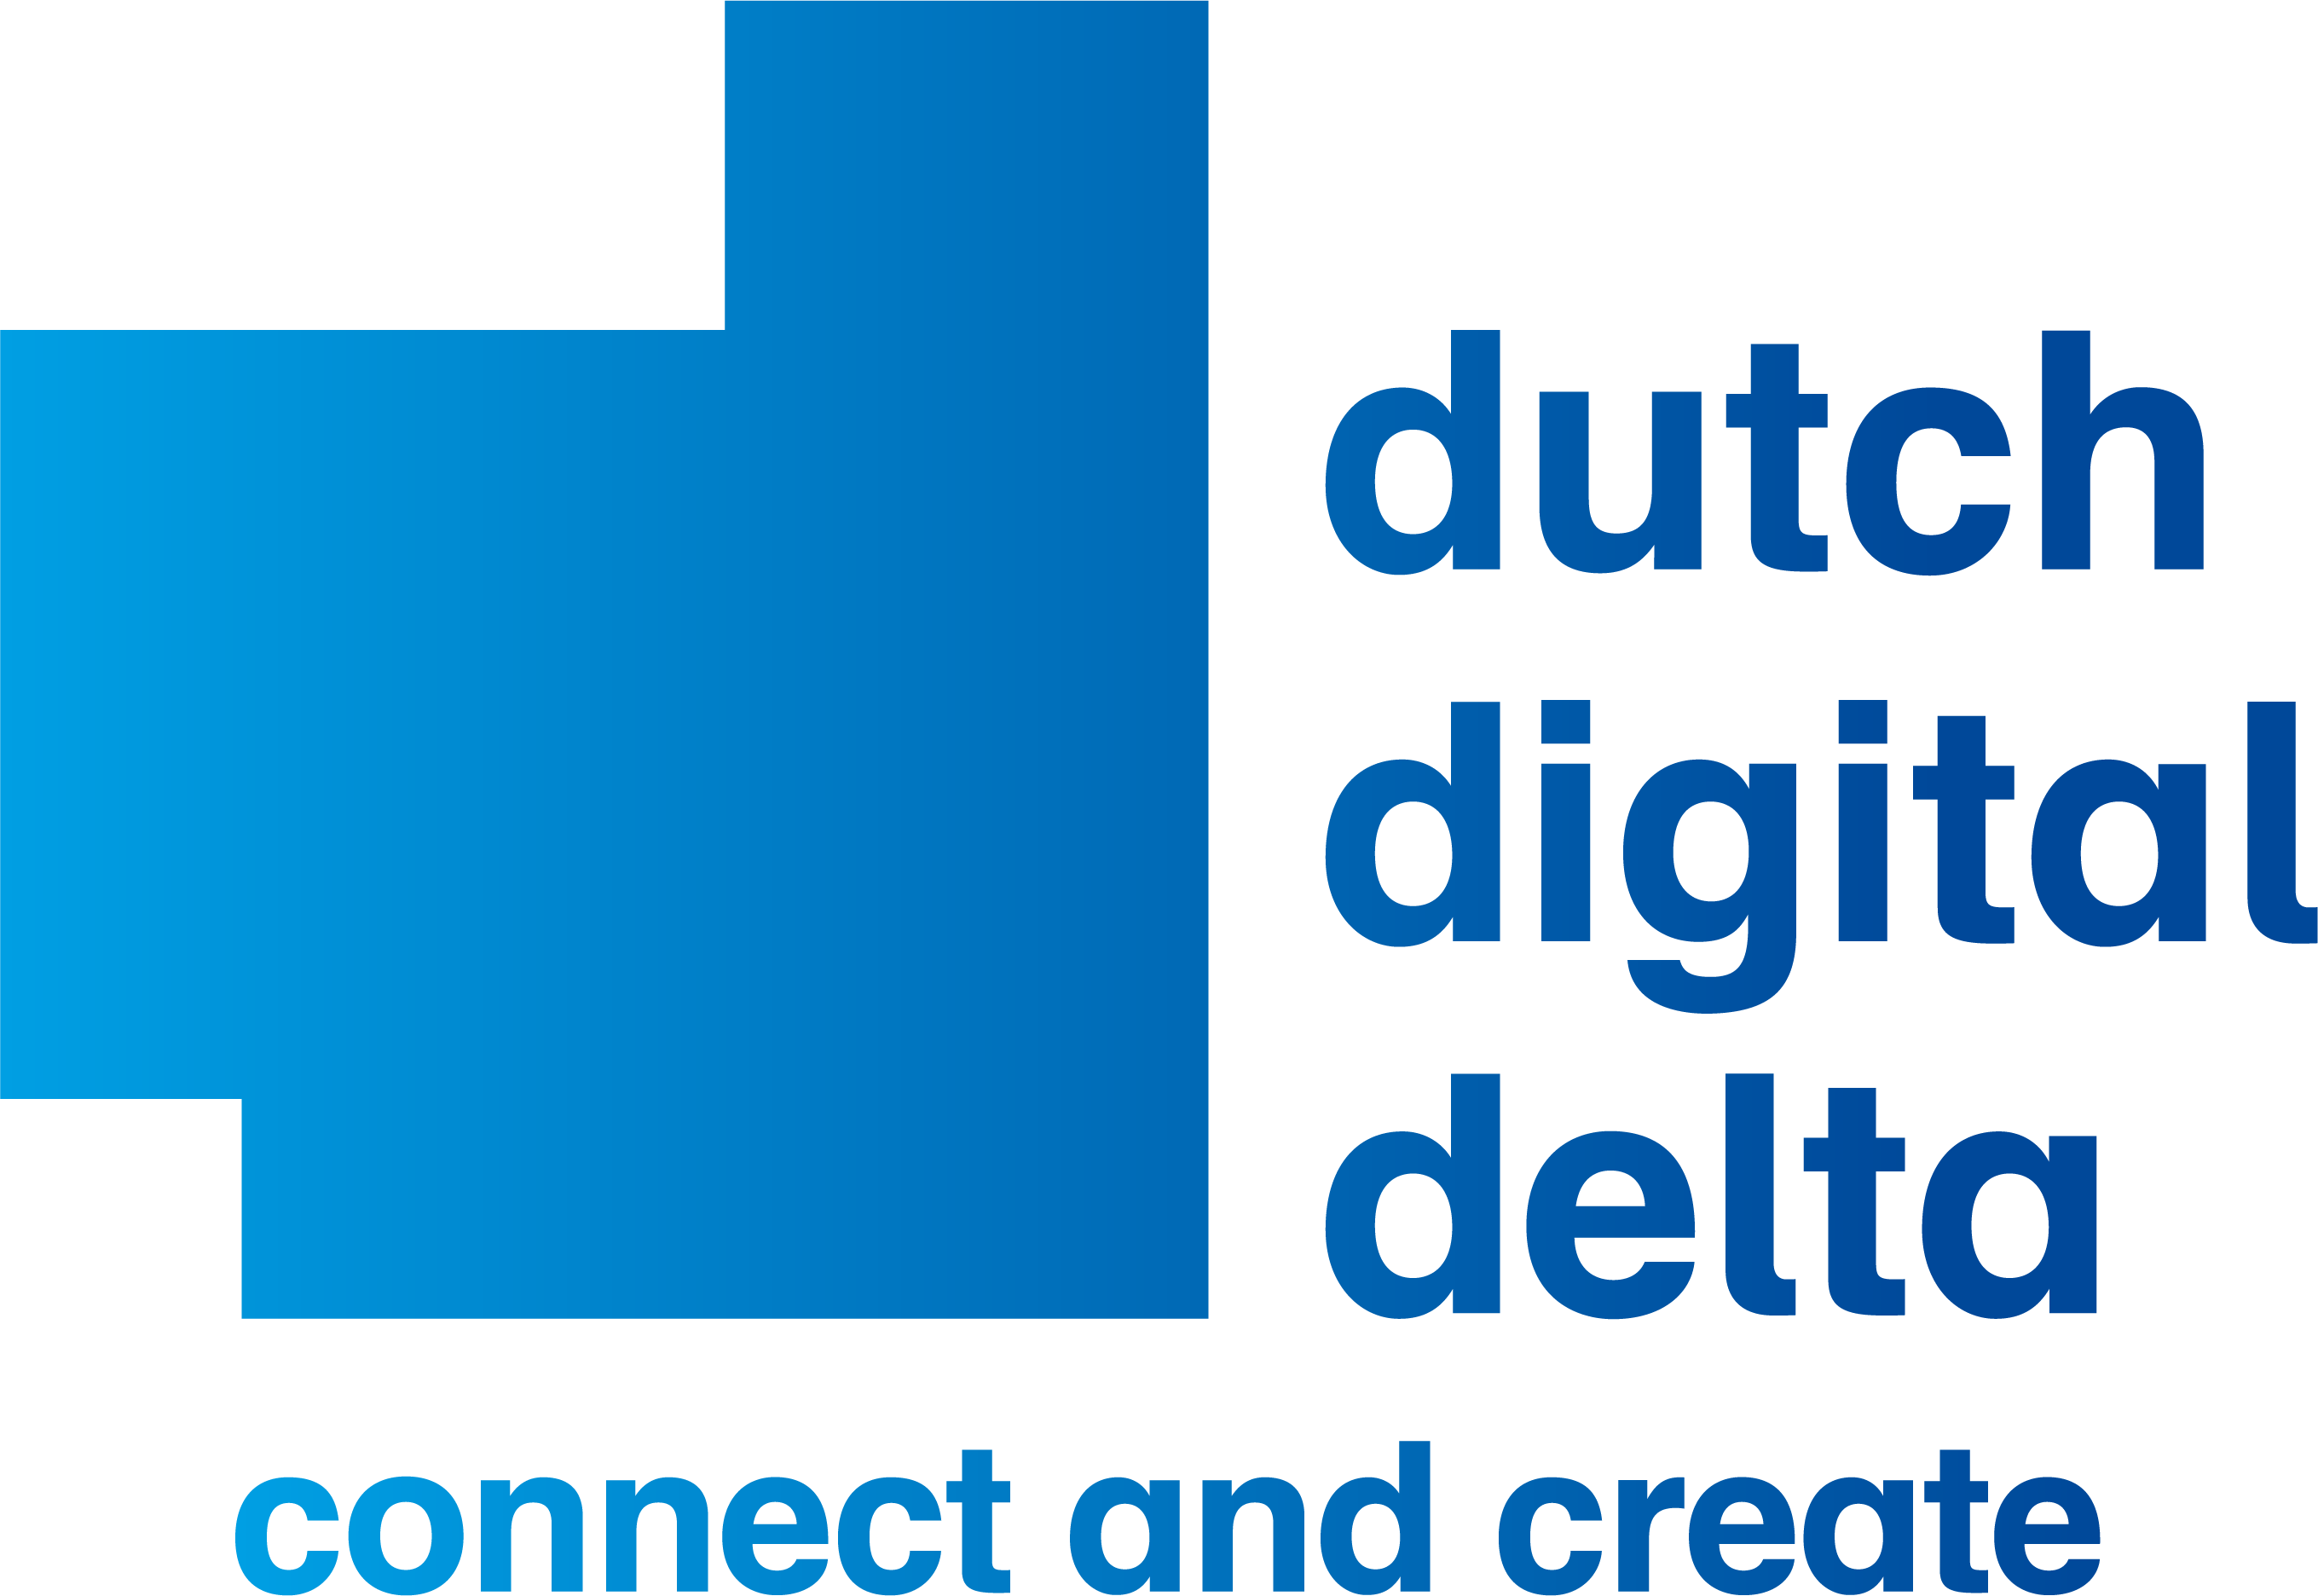 Dutch Digital Delta